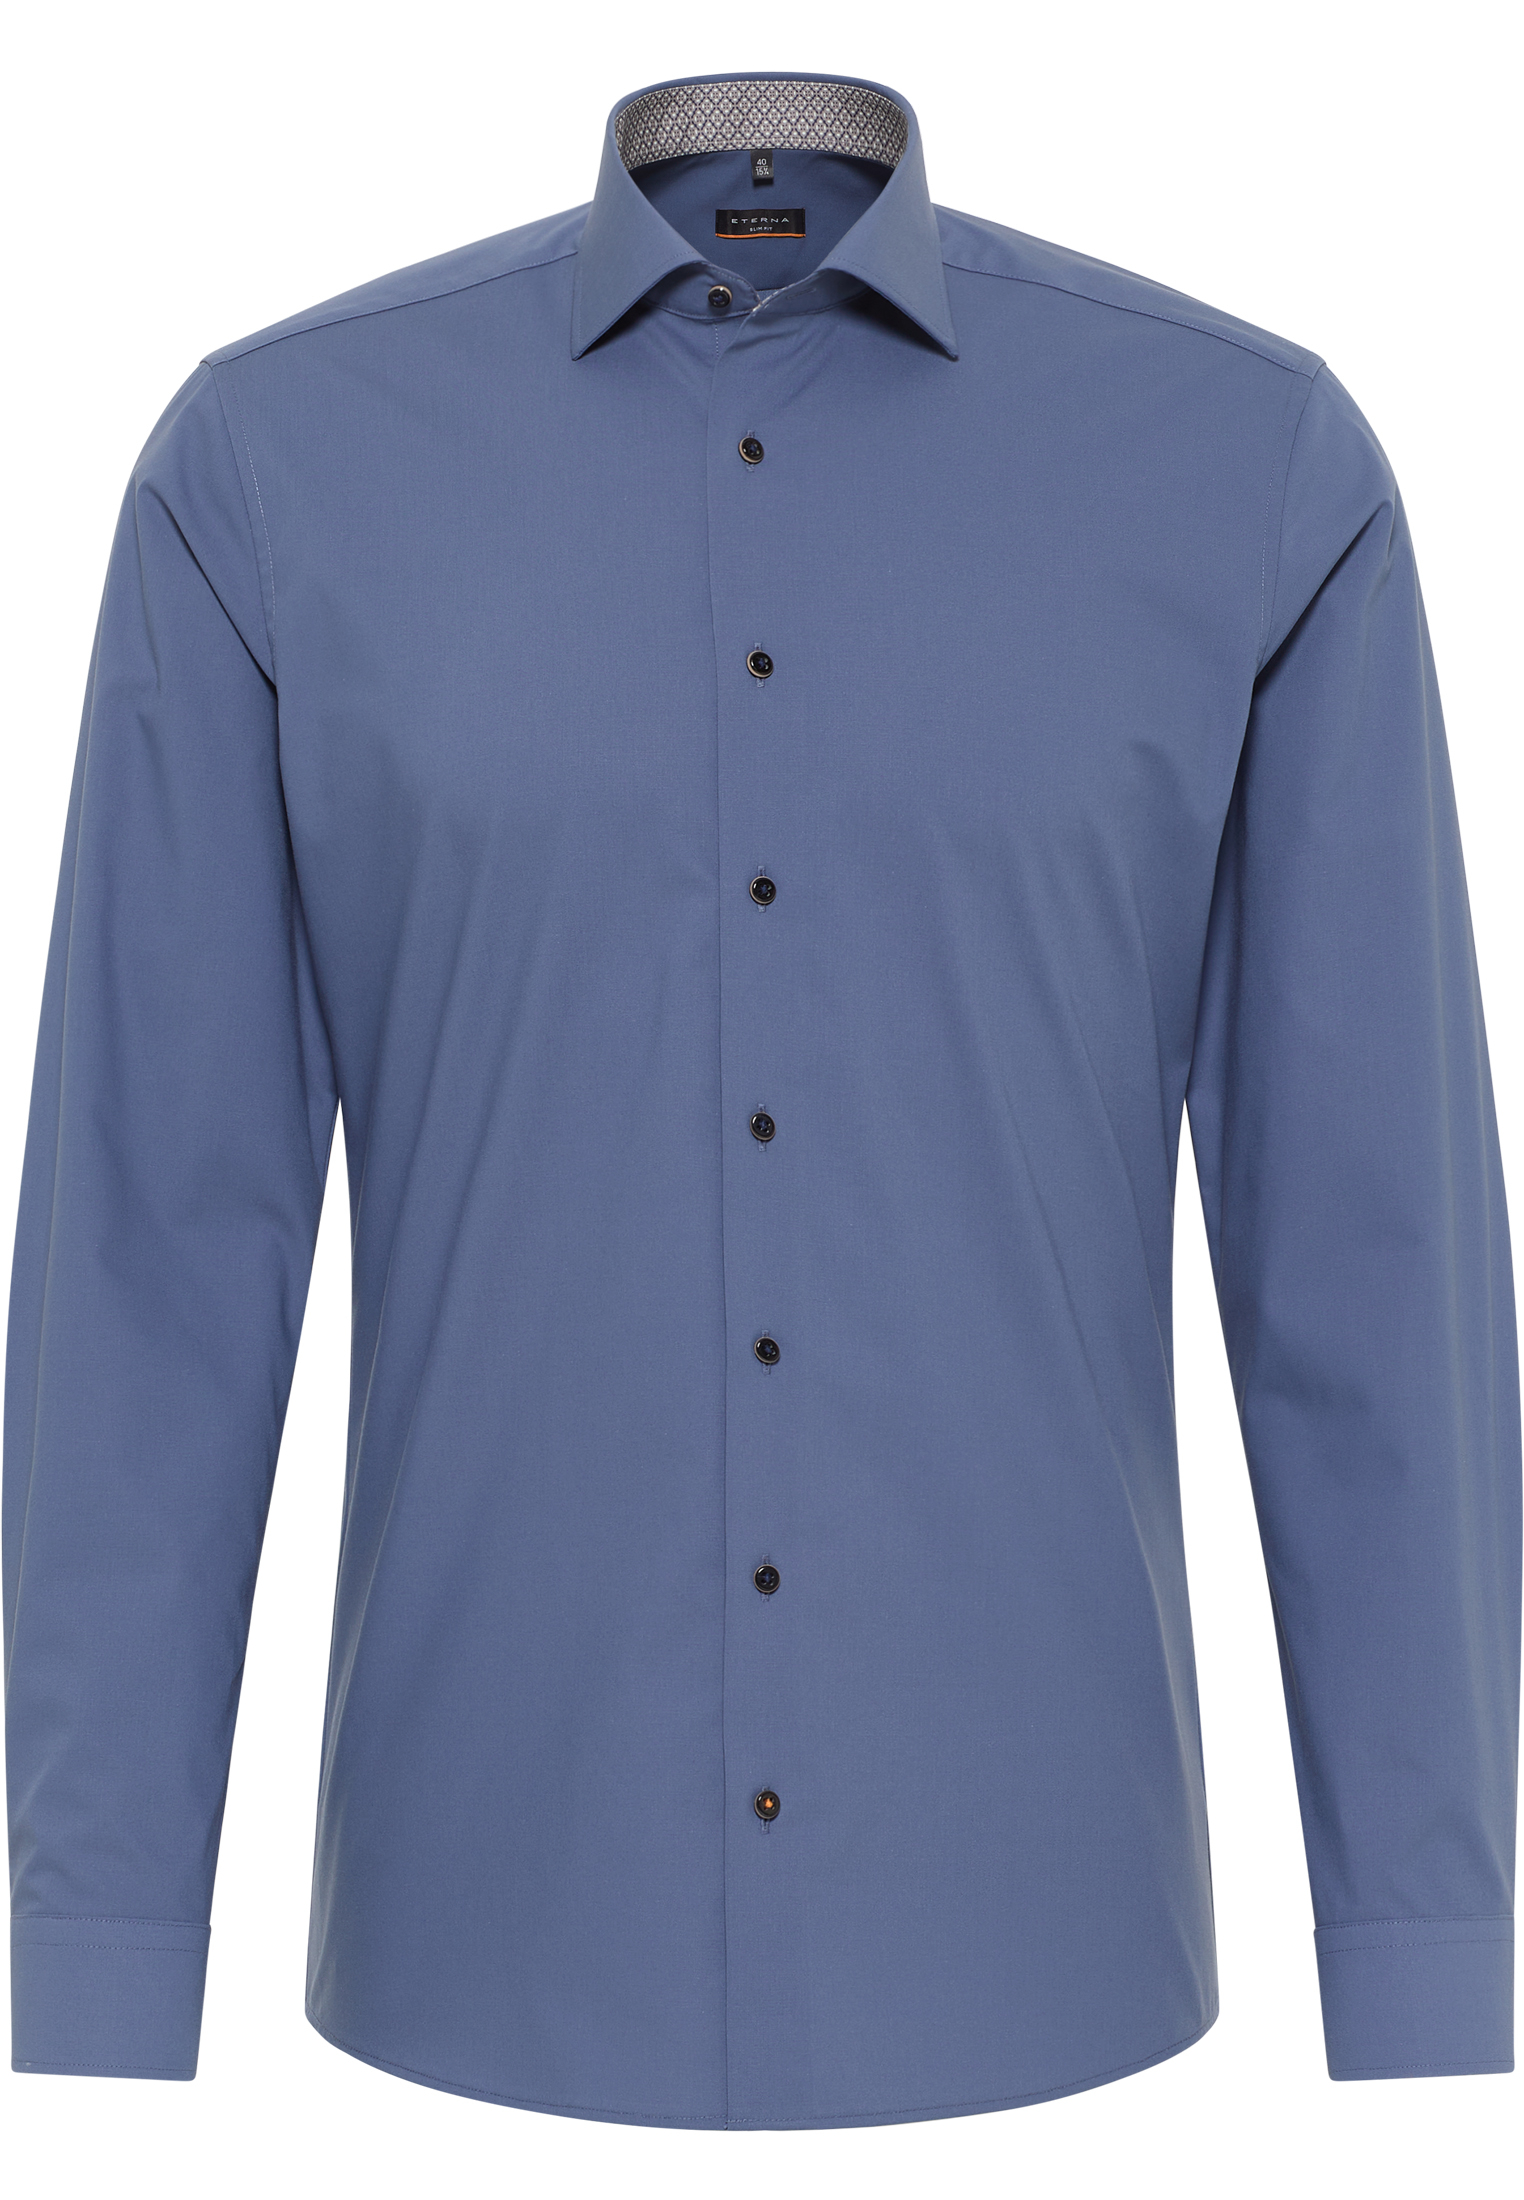 SLIM FIT Original Shirt bleu gris uni